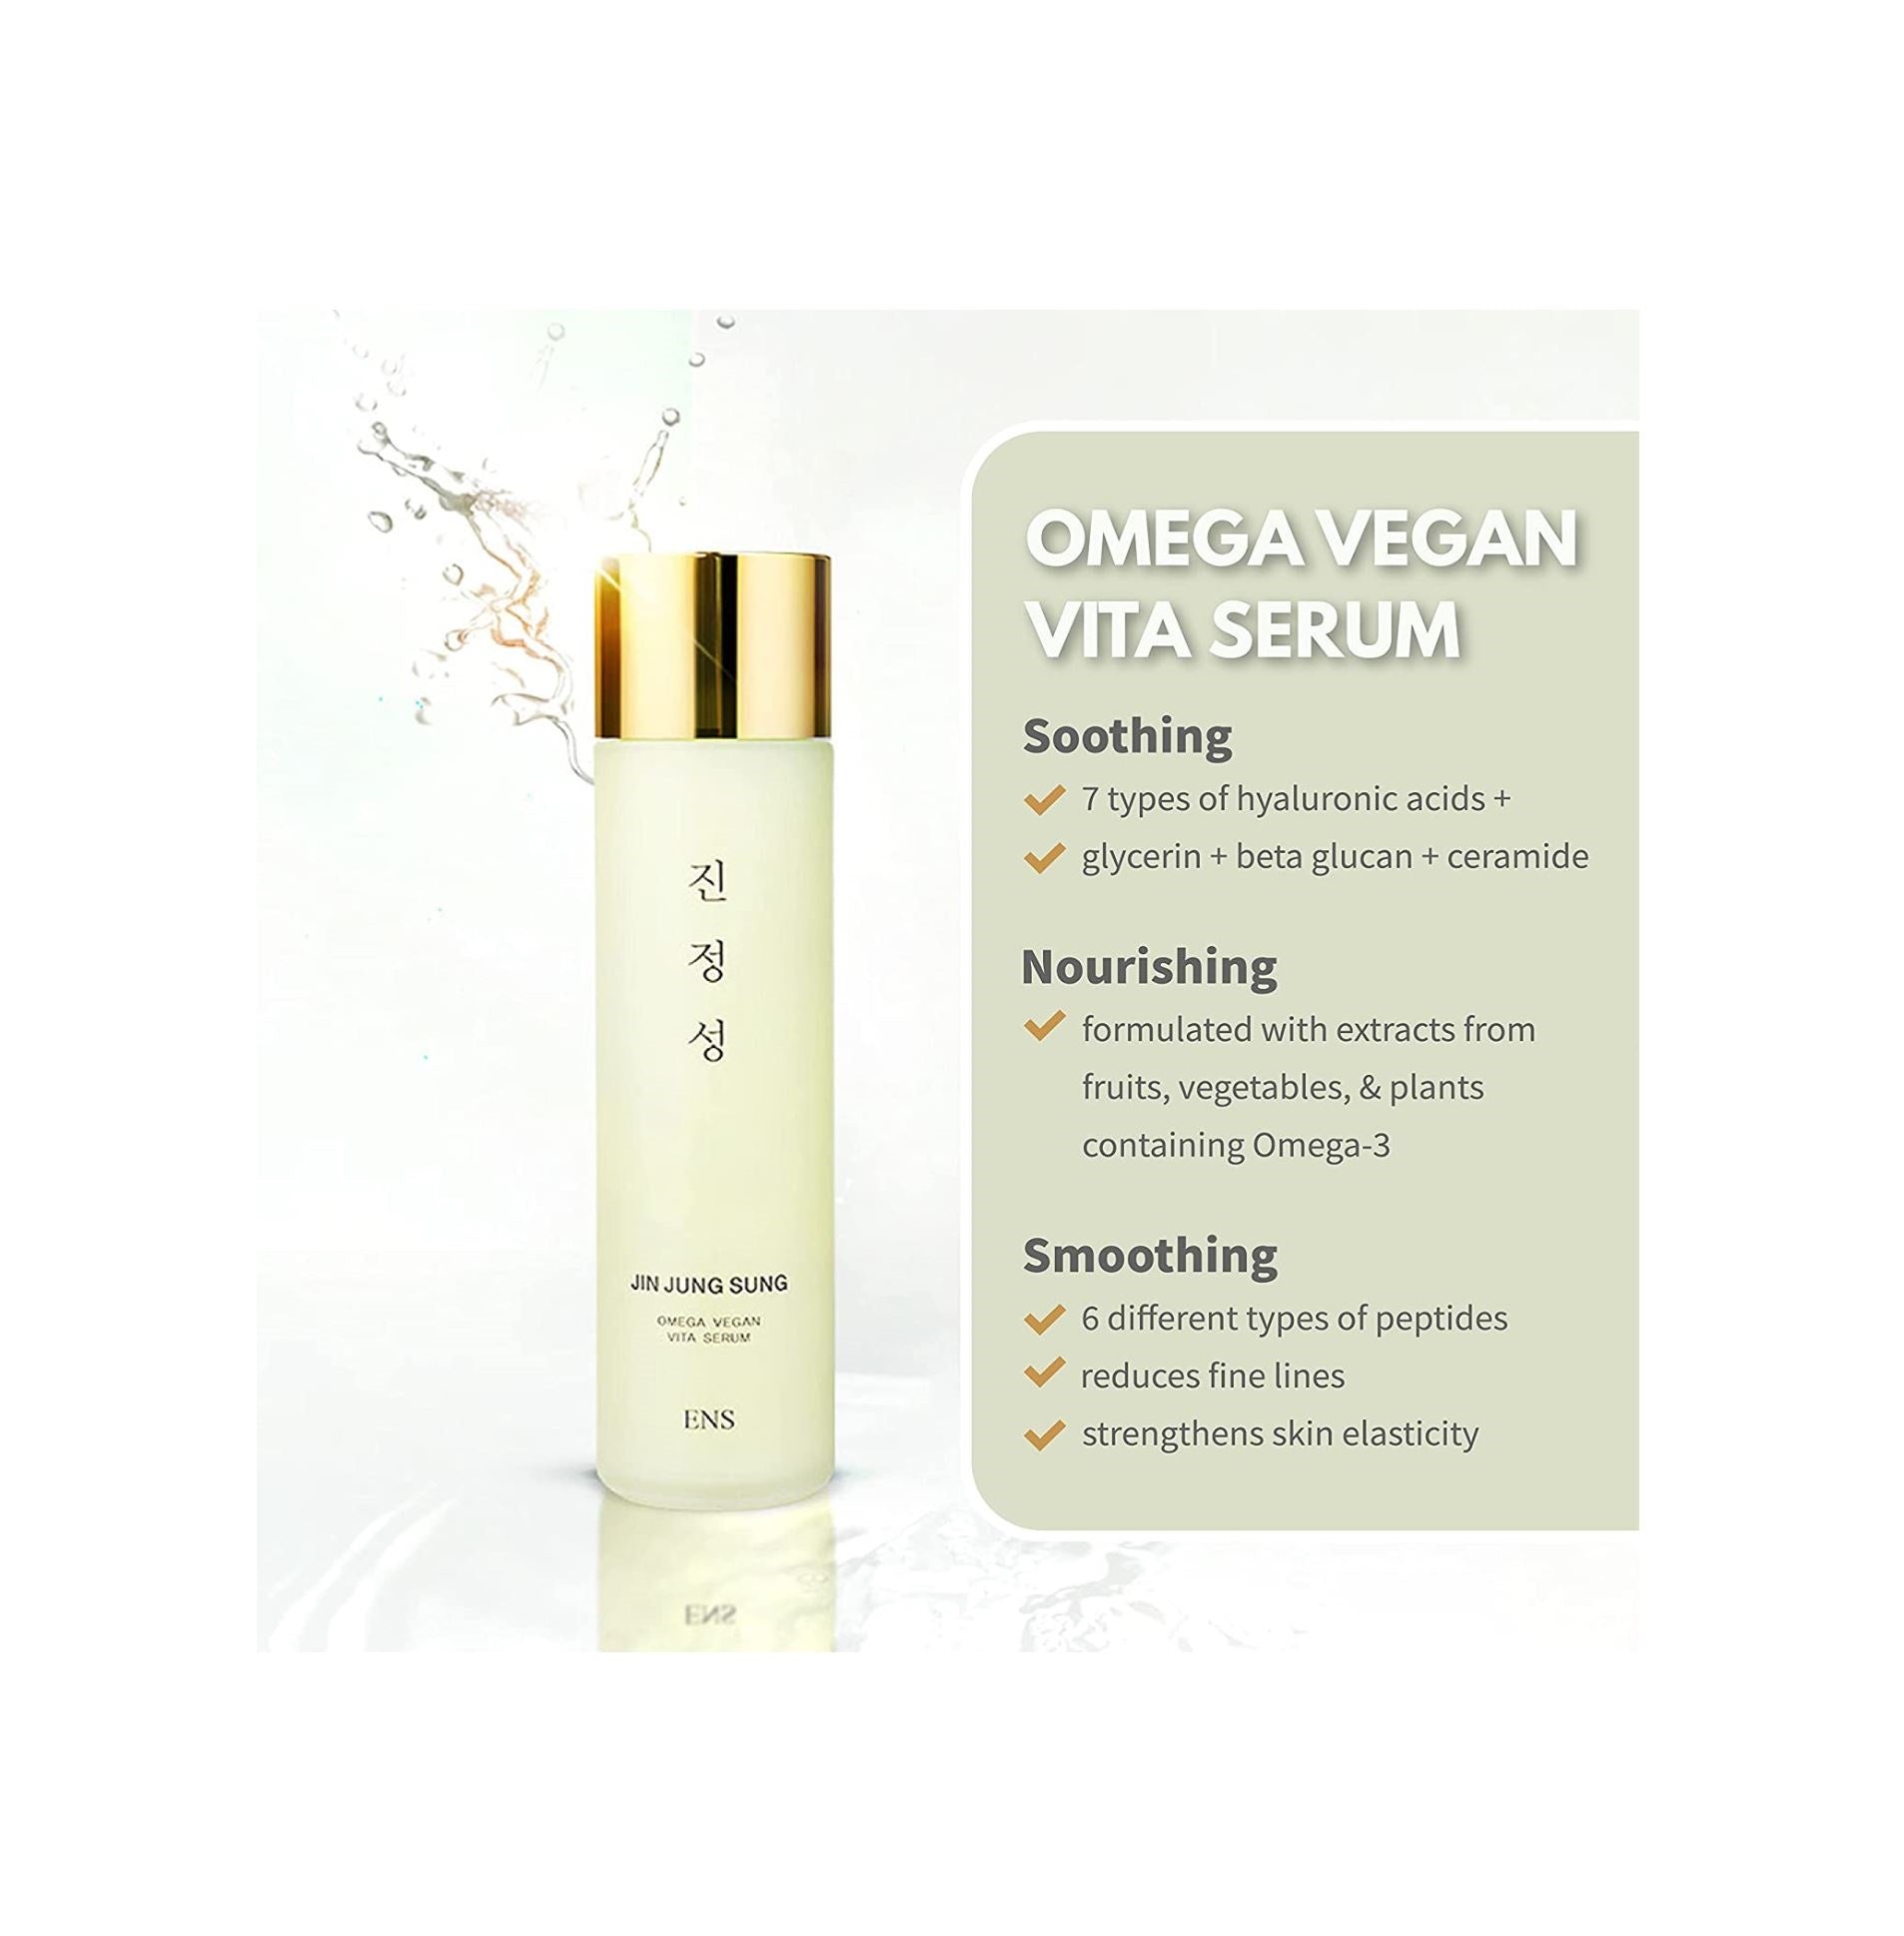 Omega Vegan Vita Serum